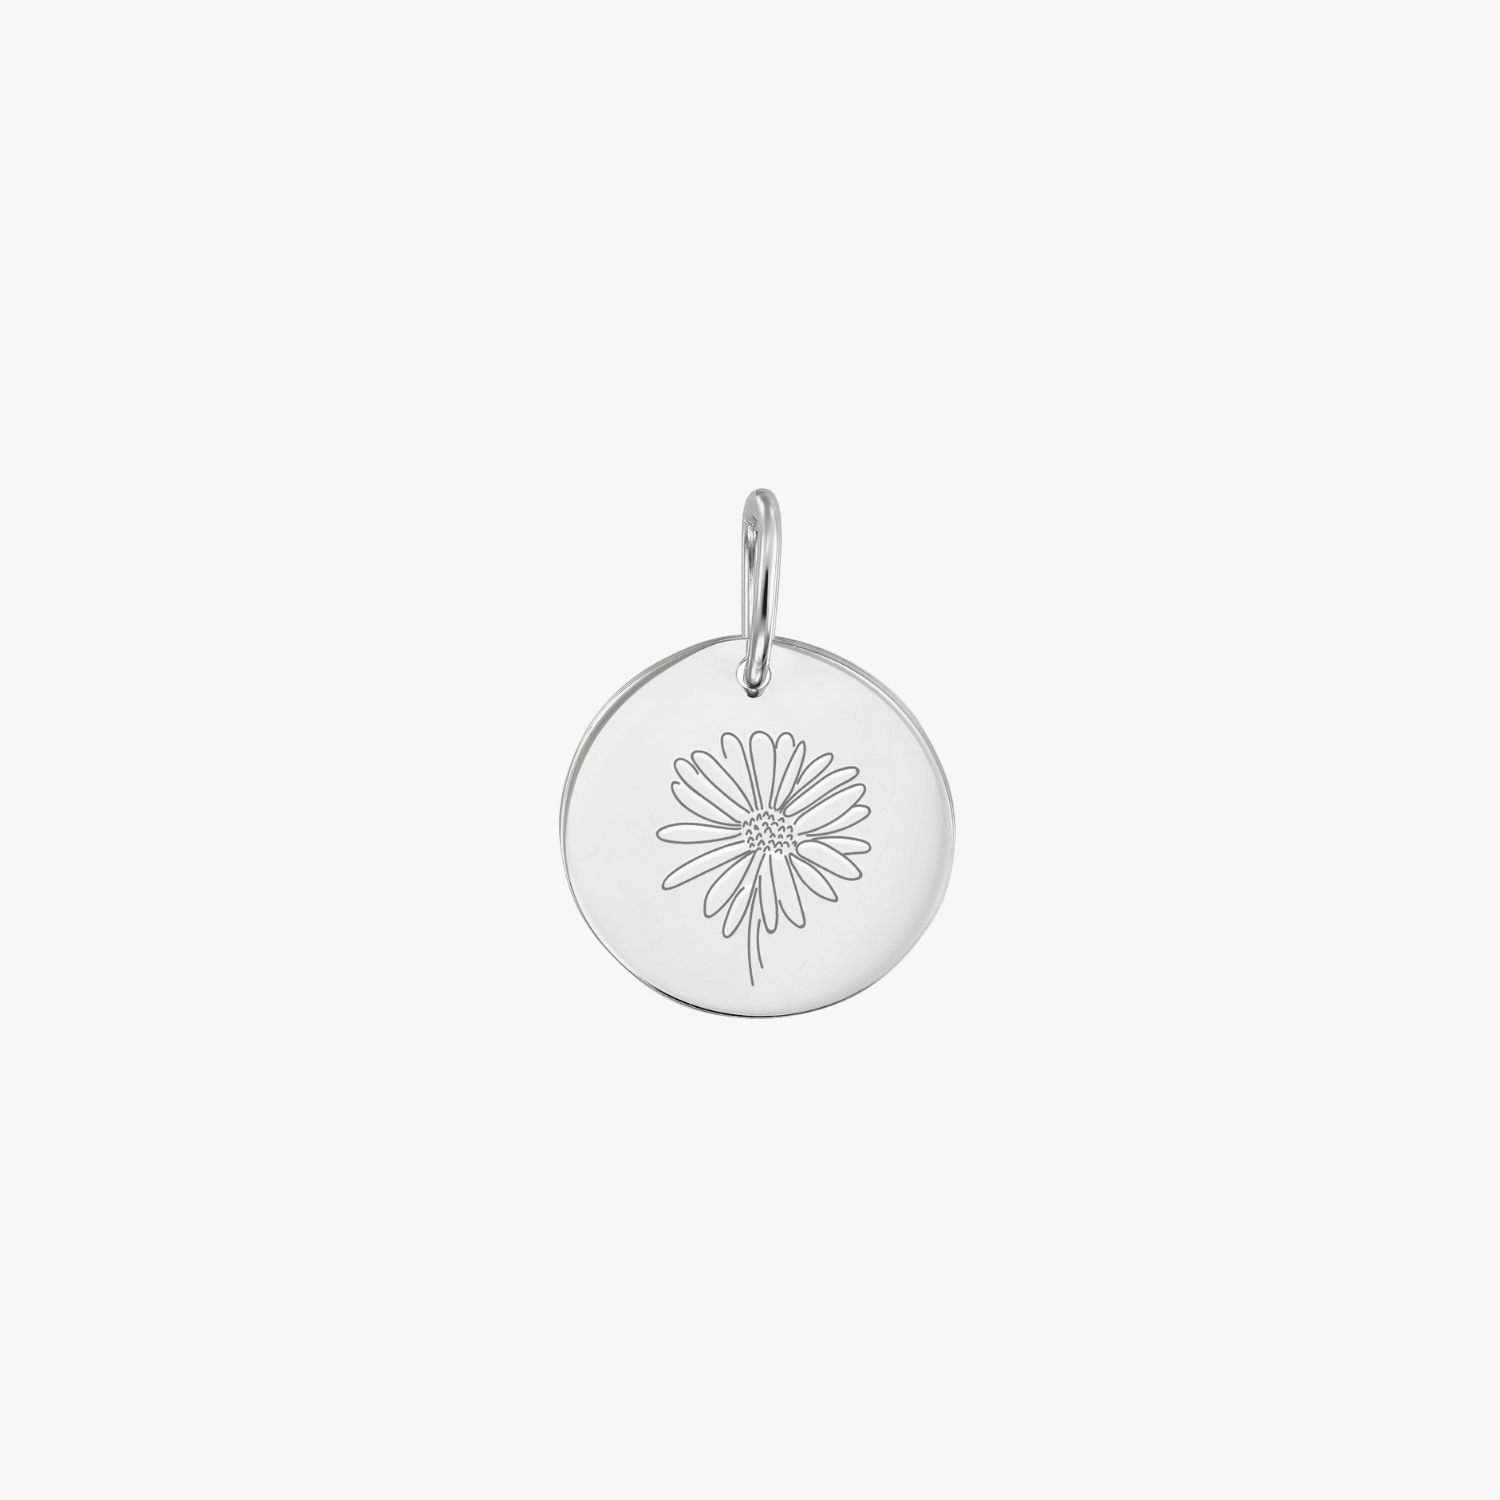 Birth Flower - April Daisy white gold pendant